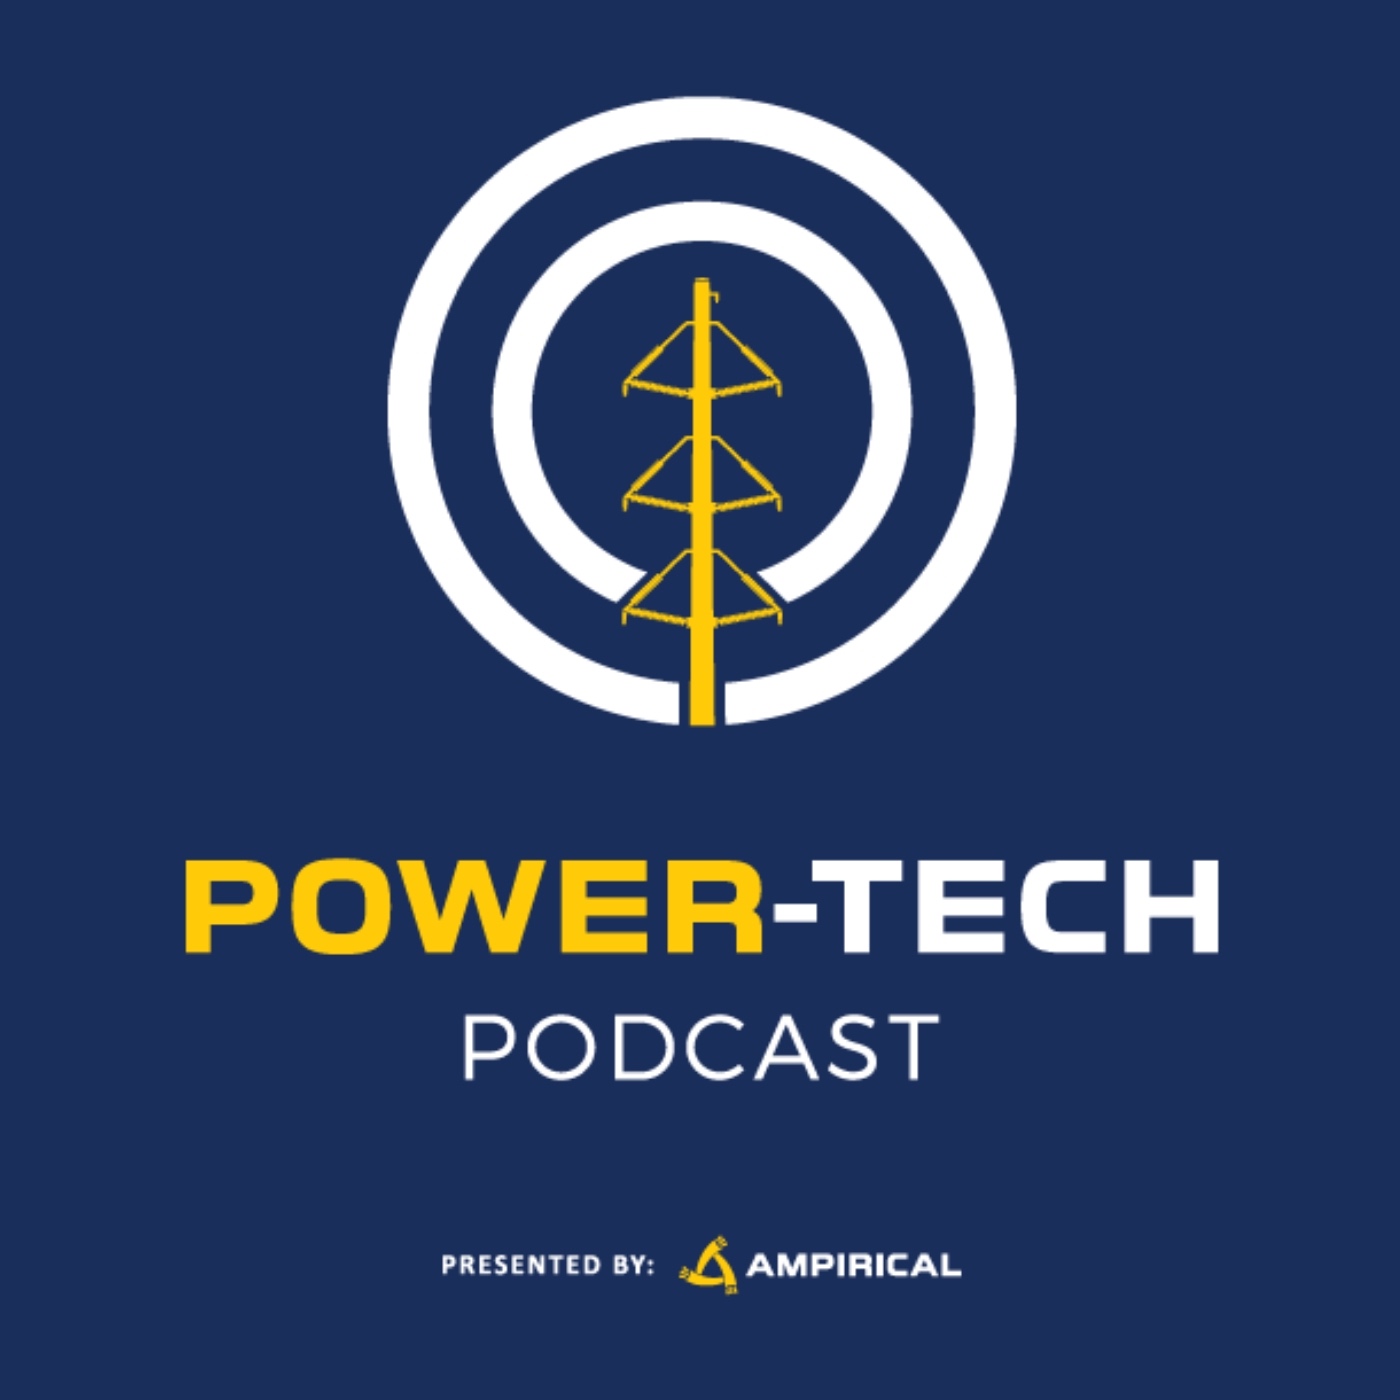 Power-Tech Podcast